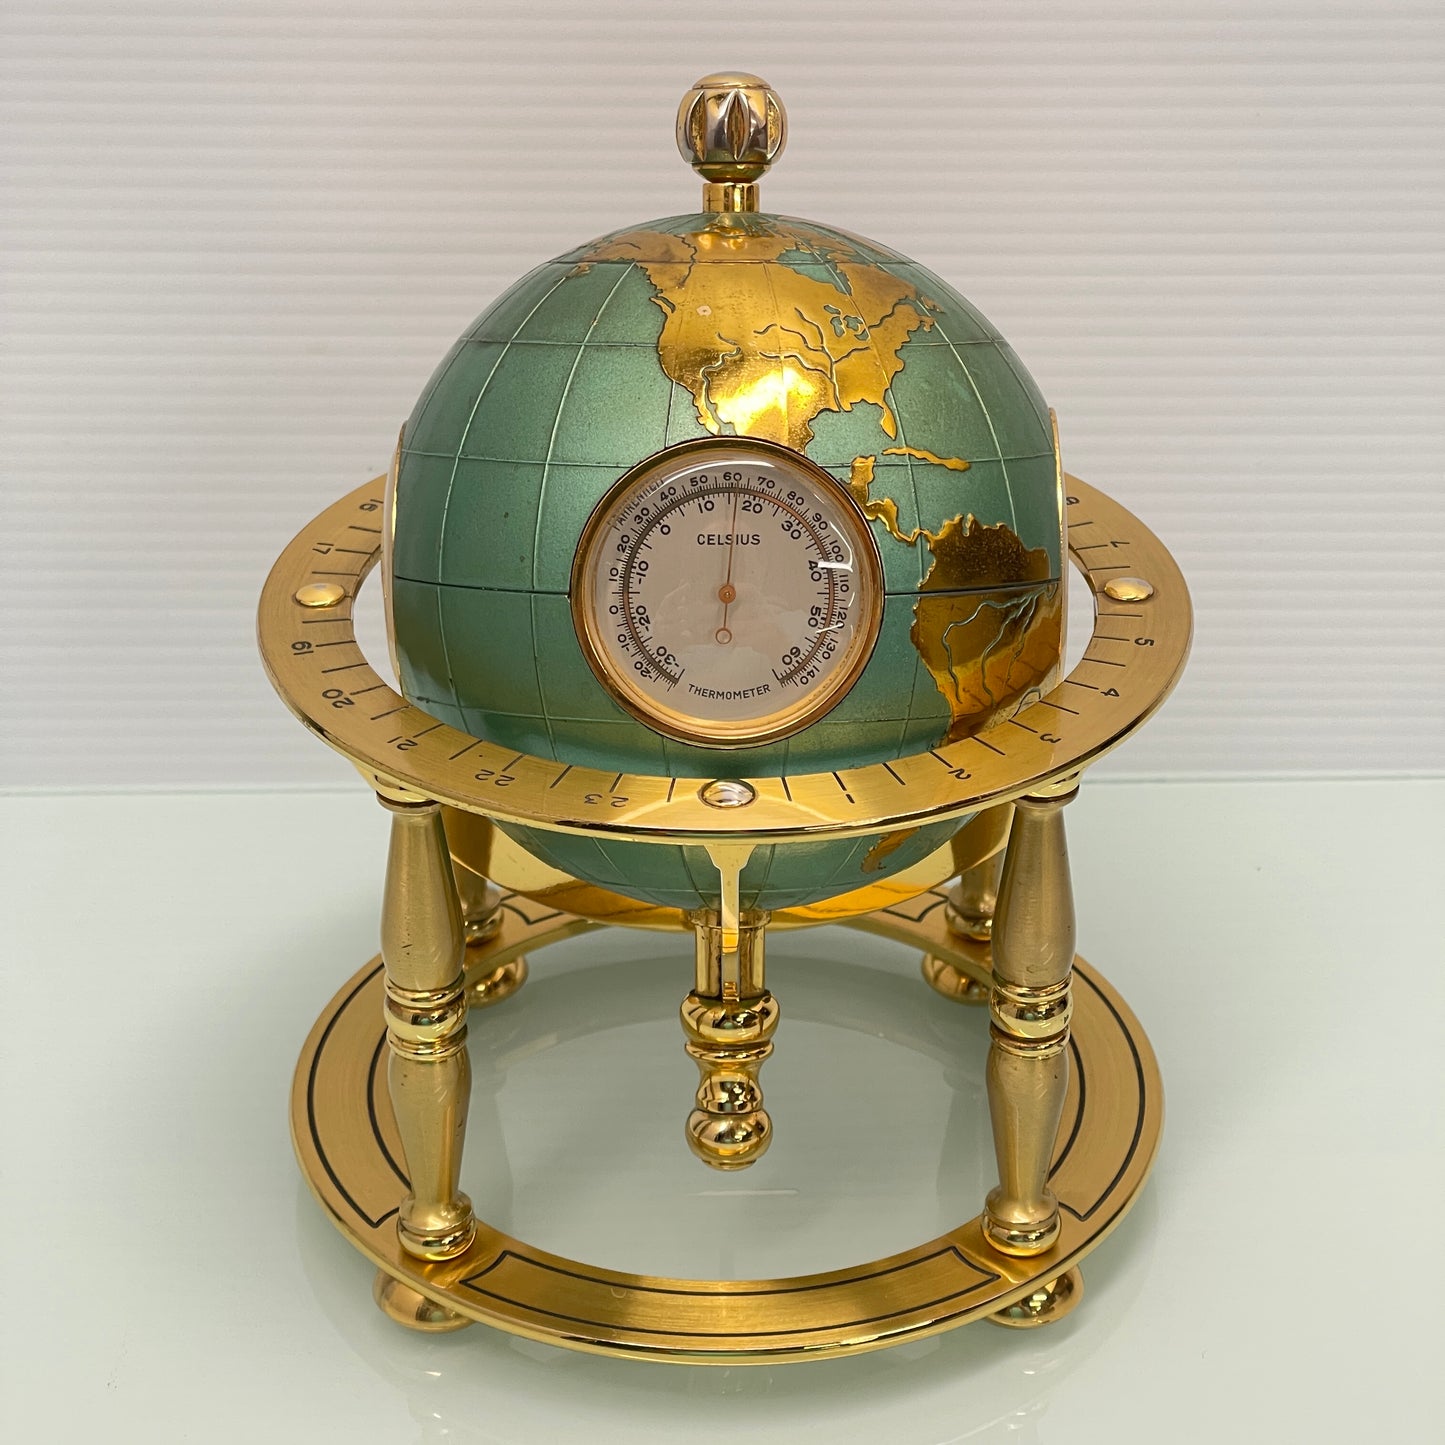 Rare Angelus Gilt Globe Clock and Weather Station c.1950